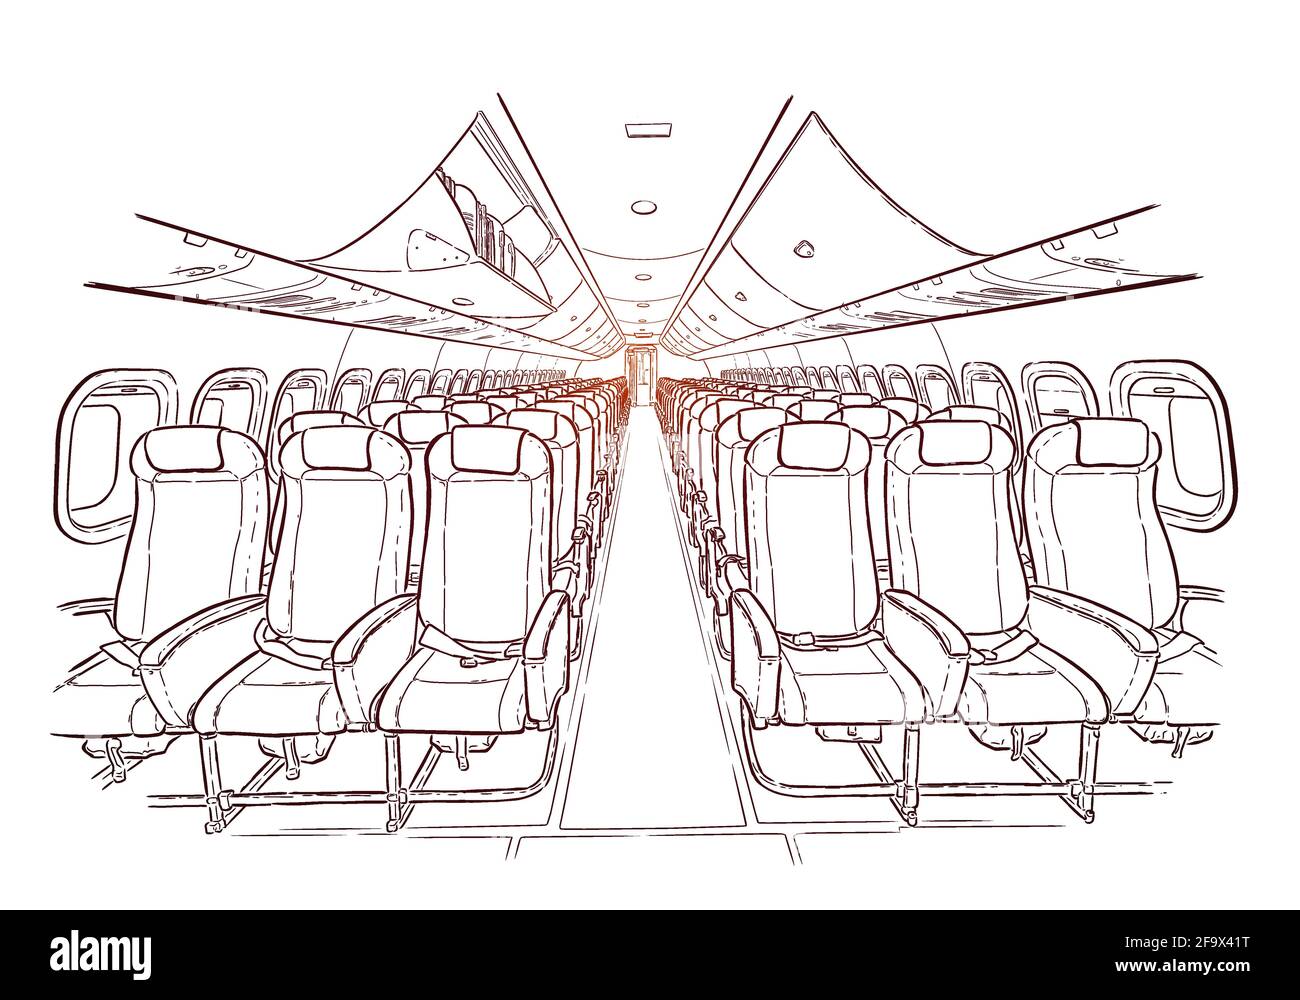 Airplane salon hand drawn sketch vector illustration Stock Vector